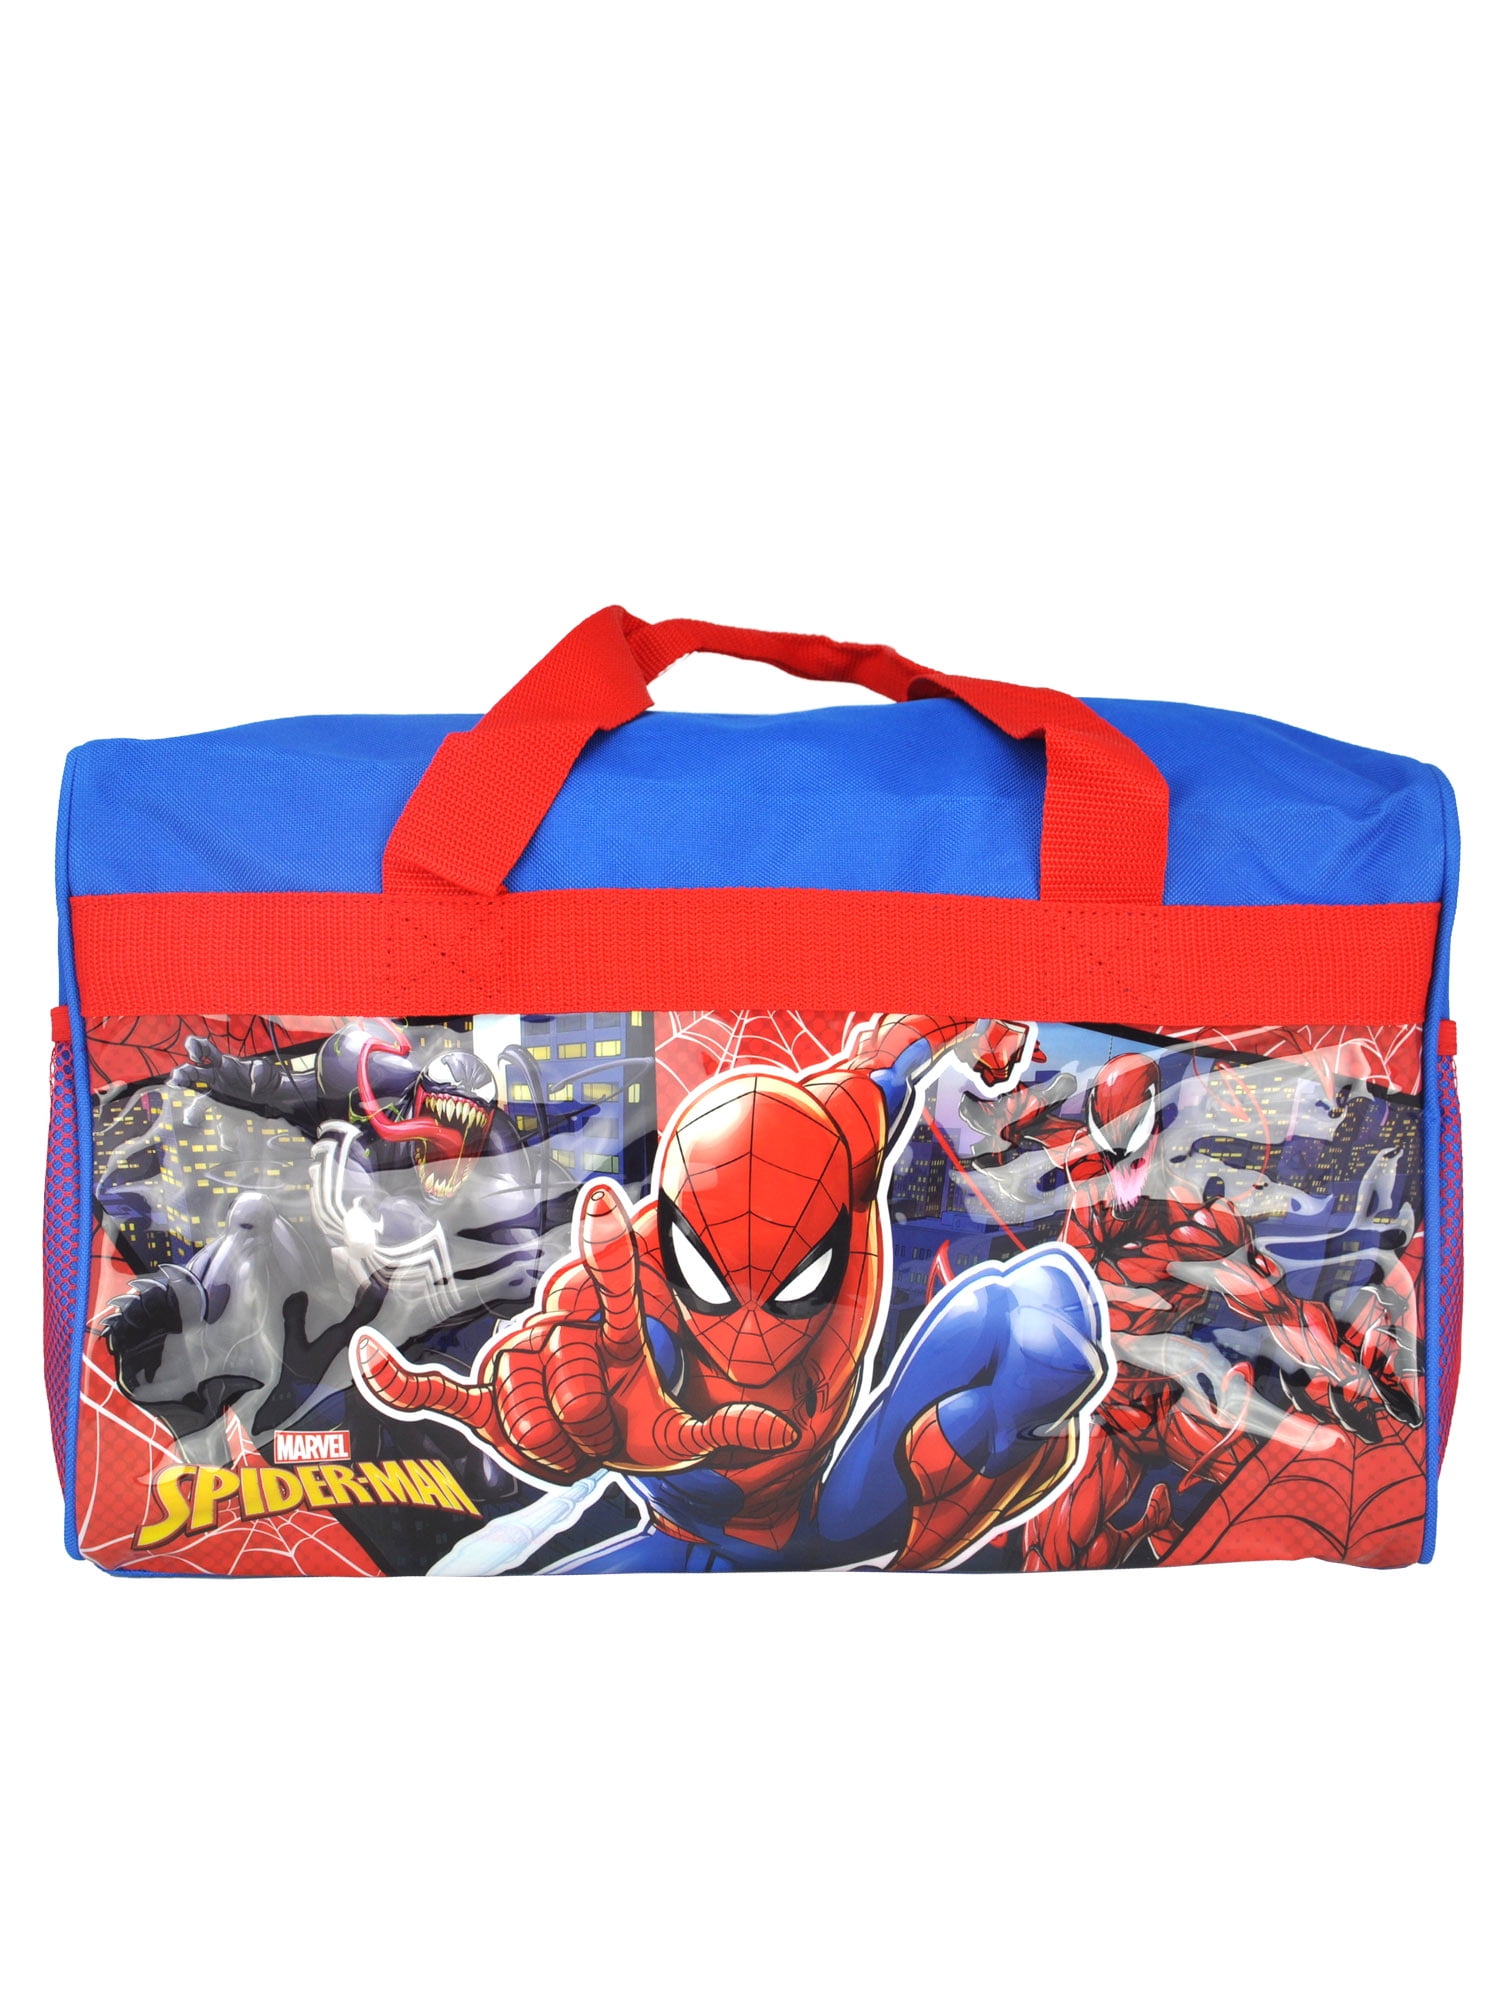 Avengers Spiderman Boys Duffel bag Sleep Over Night Travel carry on Gym Kids Toy 